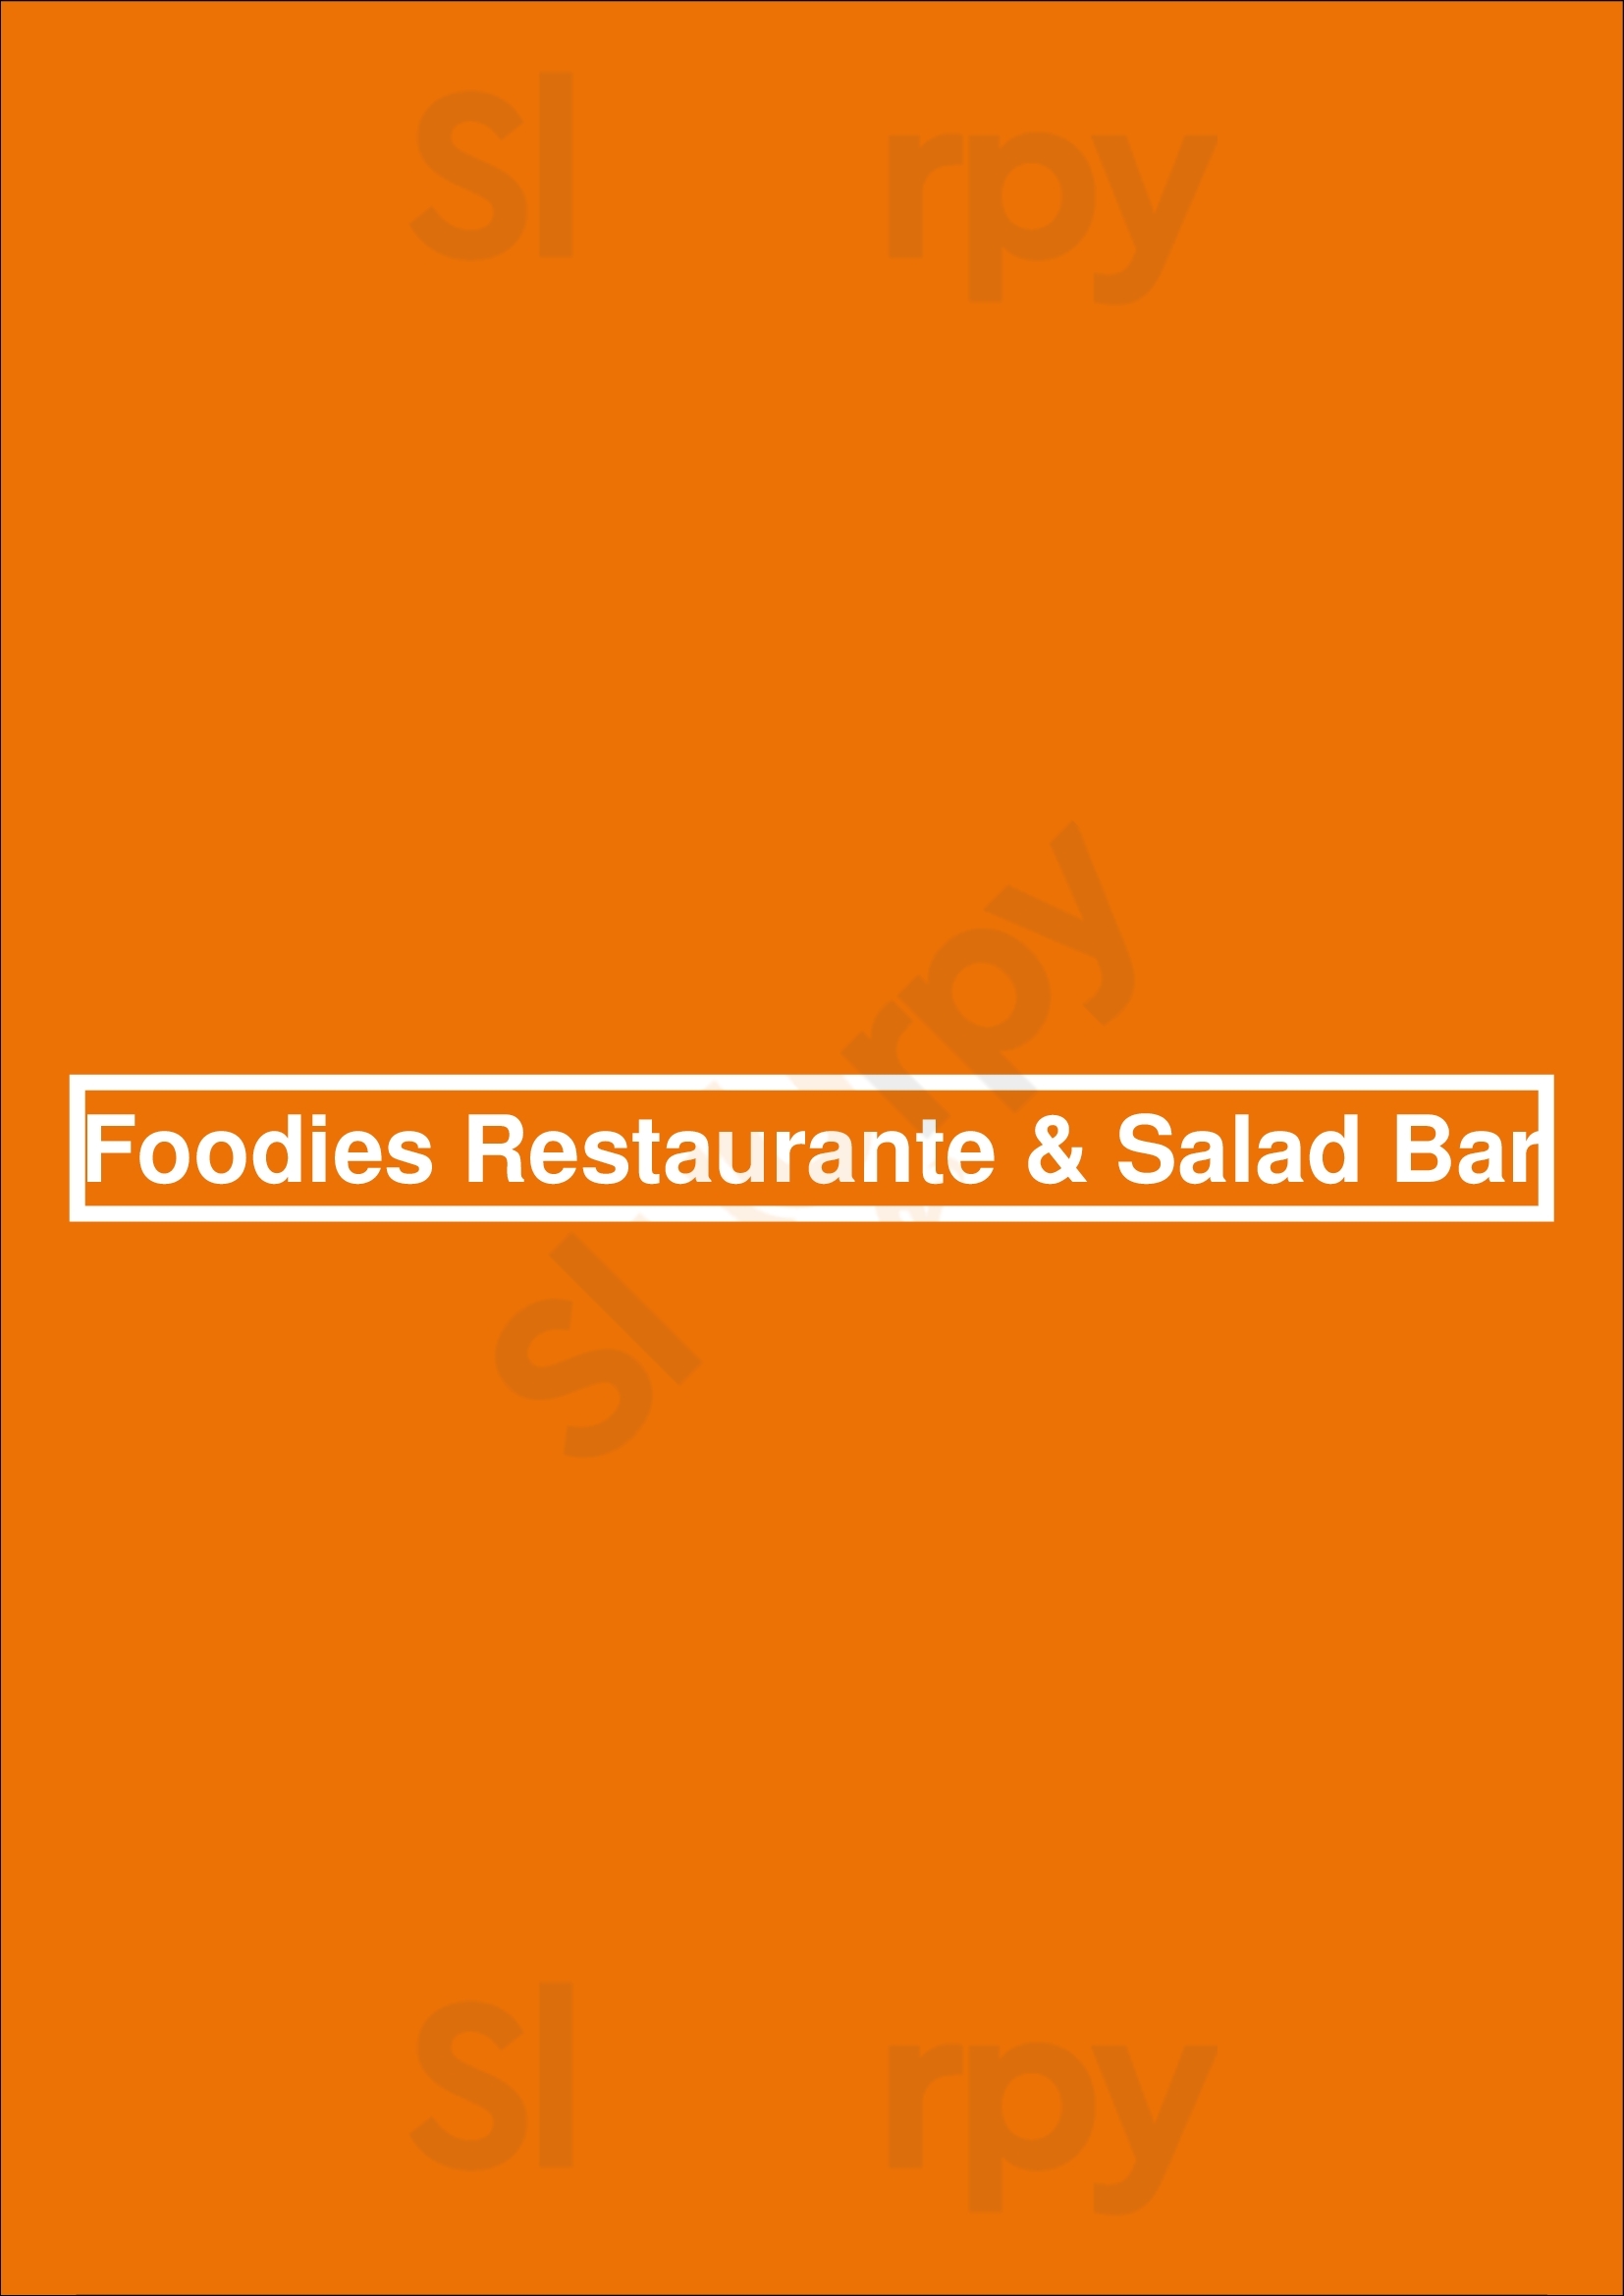 Foodies Restaurante & Salad Bar Barcelona Menu - 1